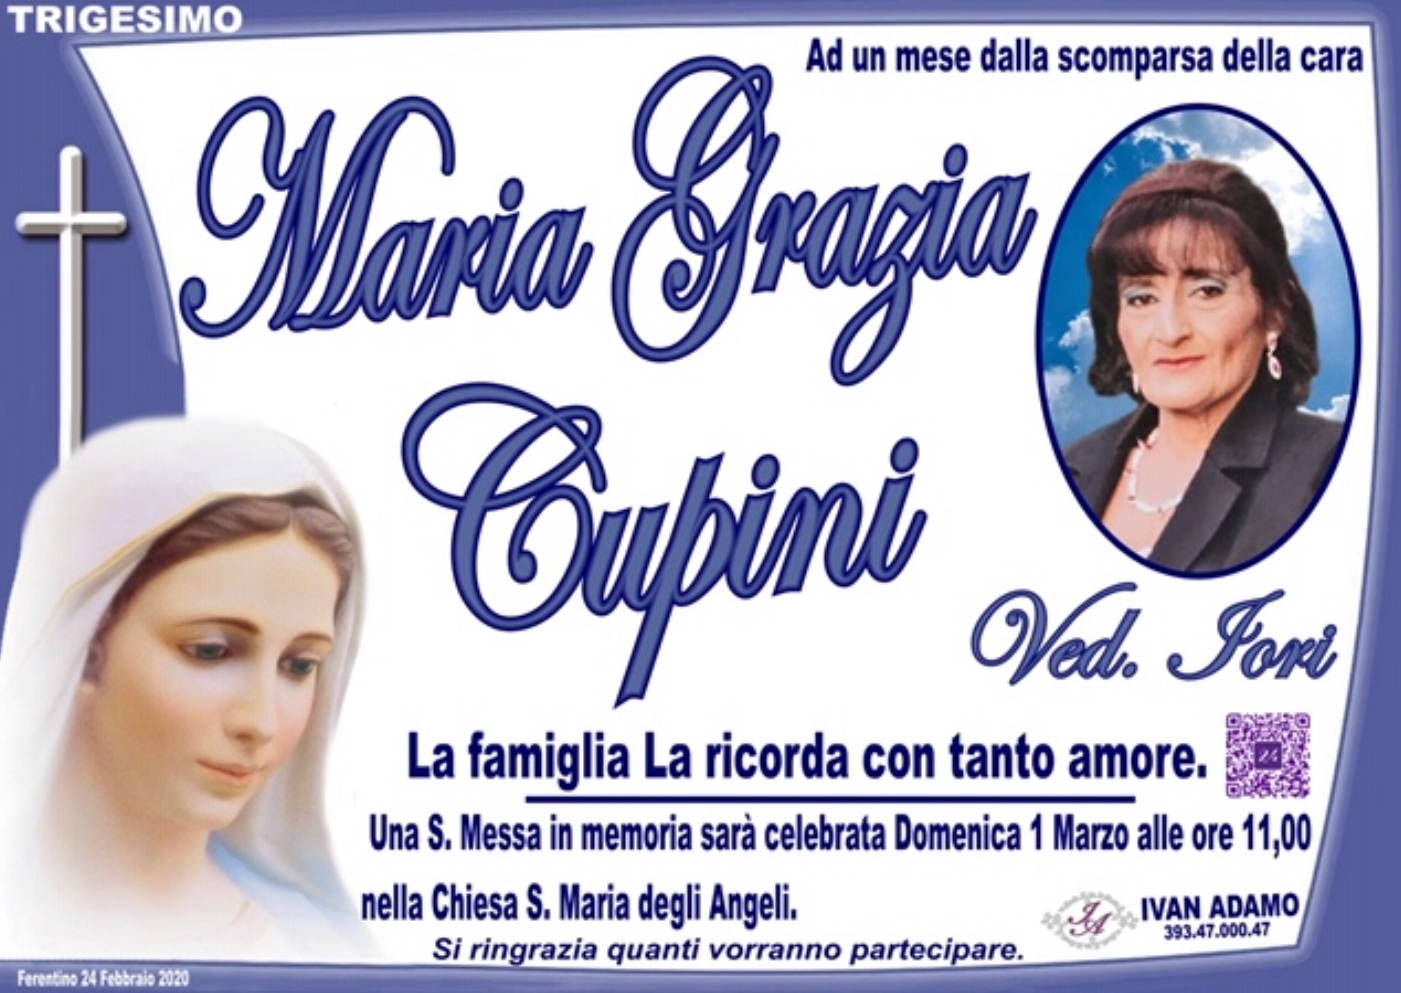 Maria Grazia Cupini